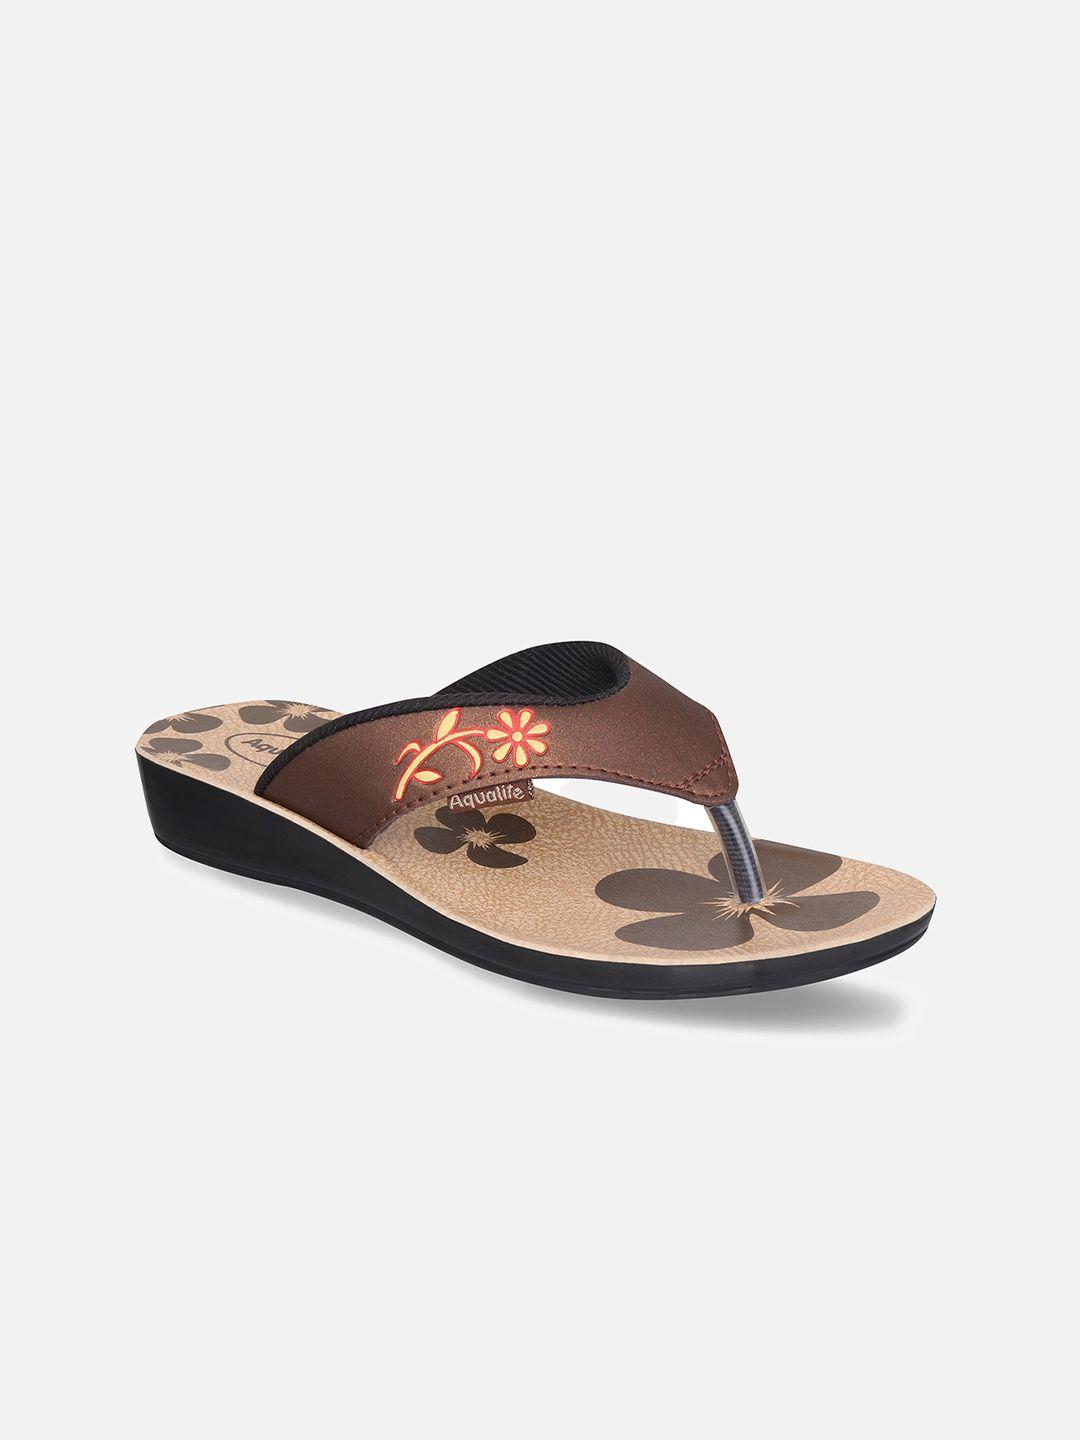 aqualite women brown printed open toe flats